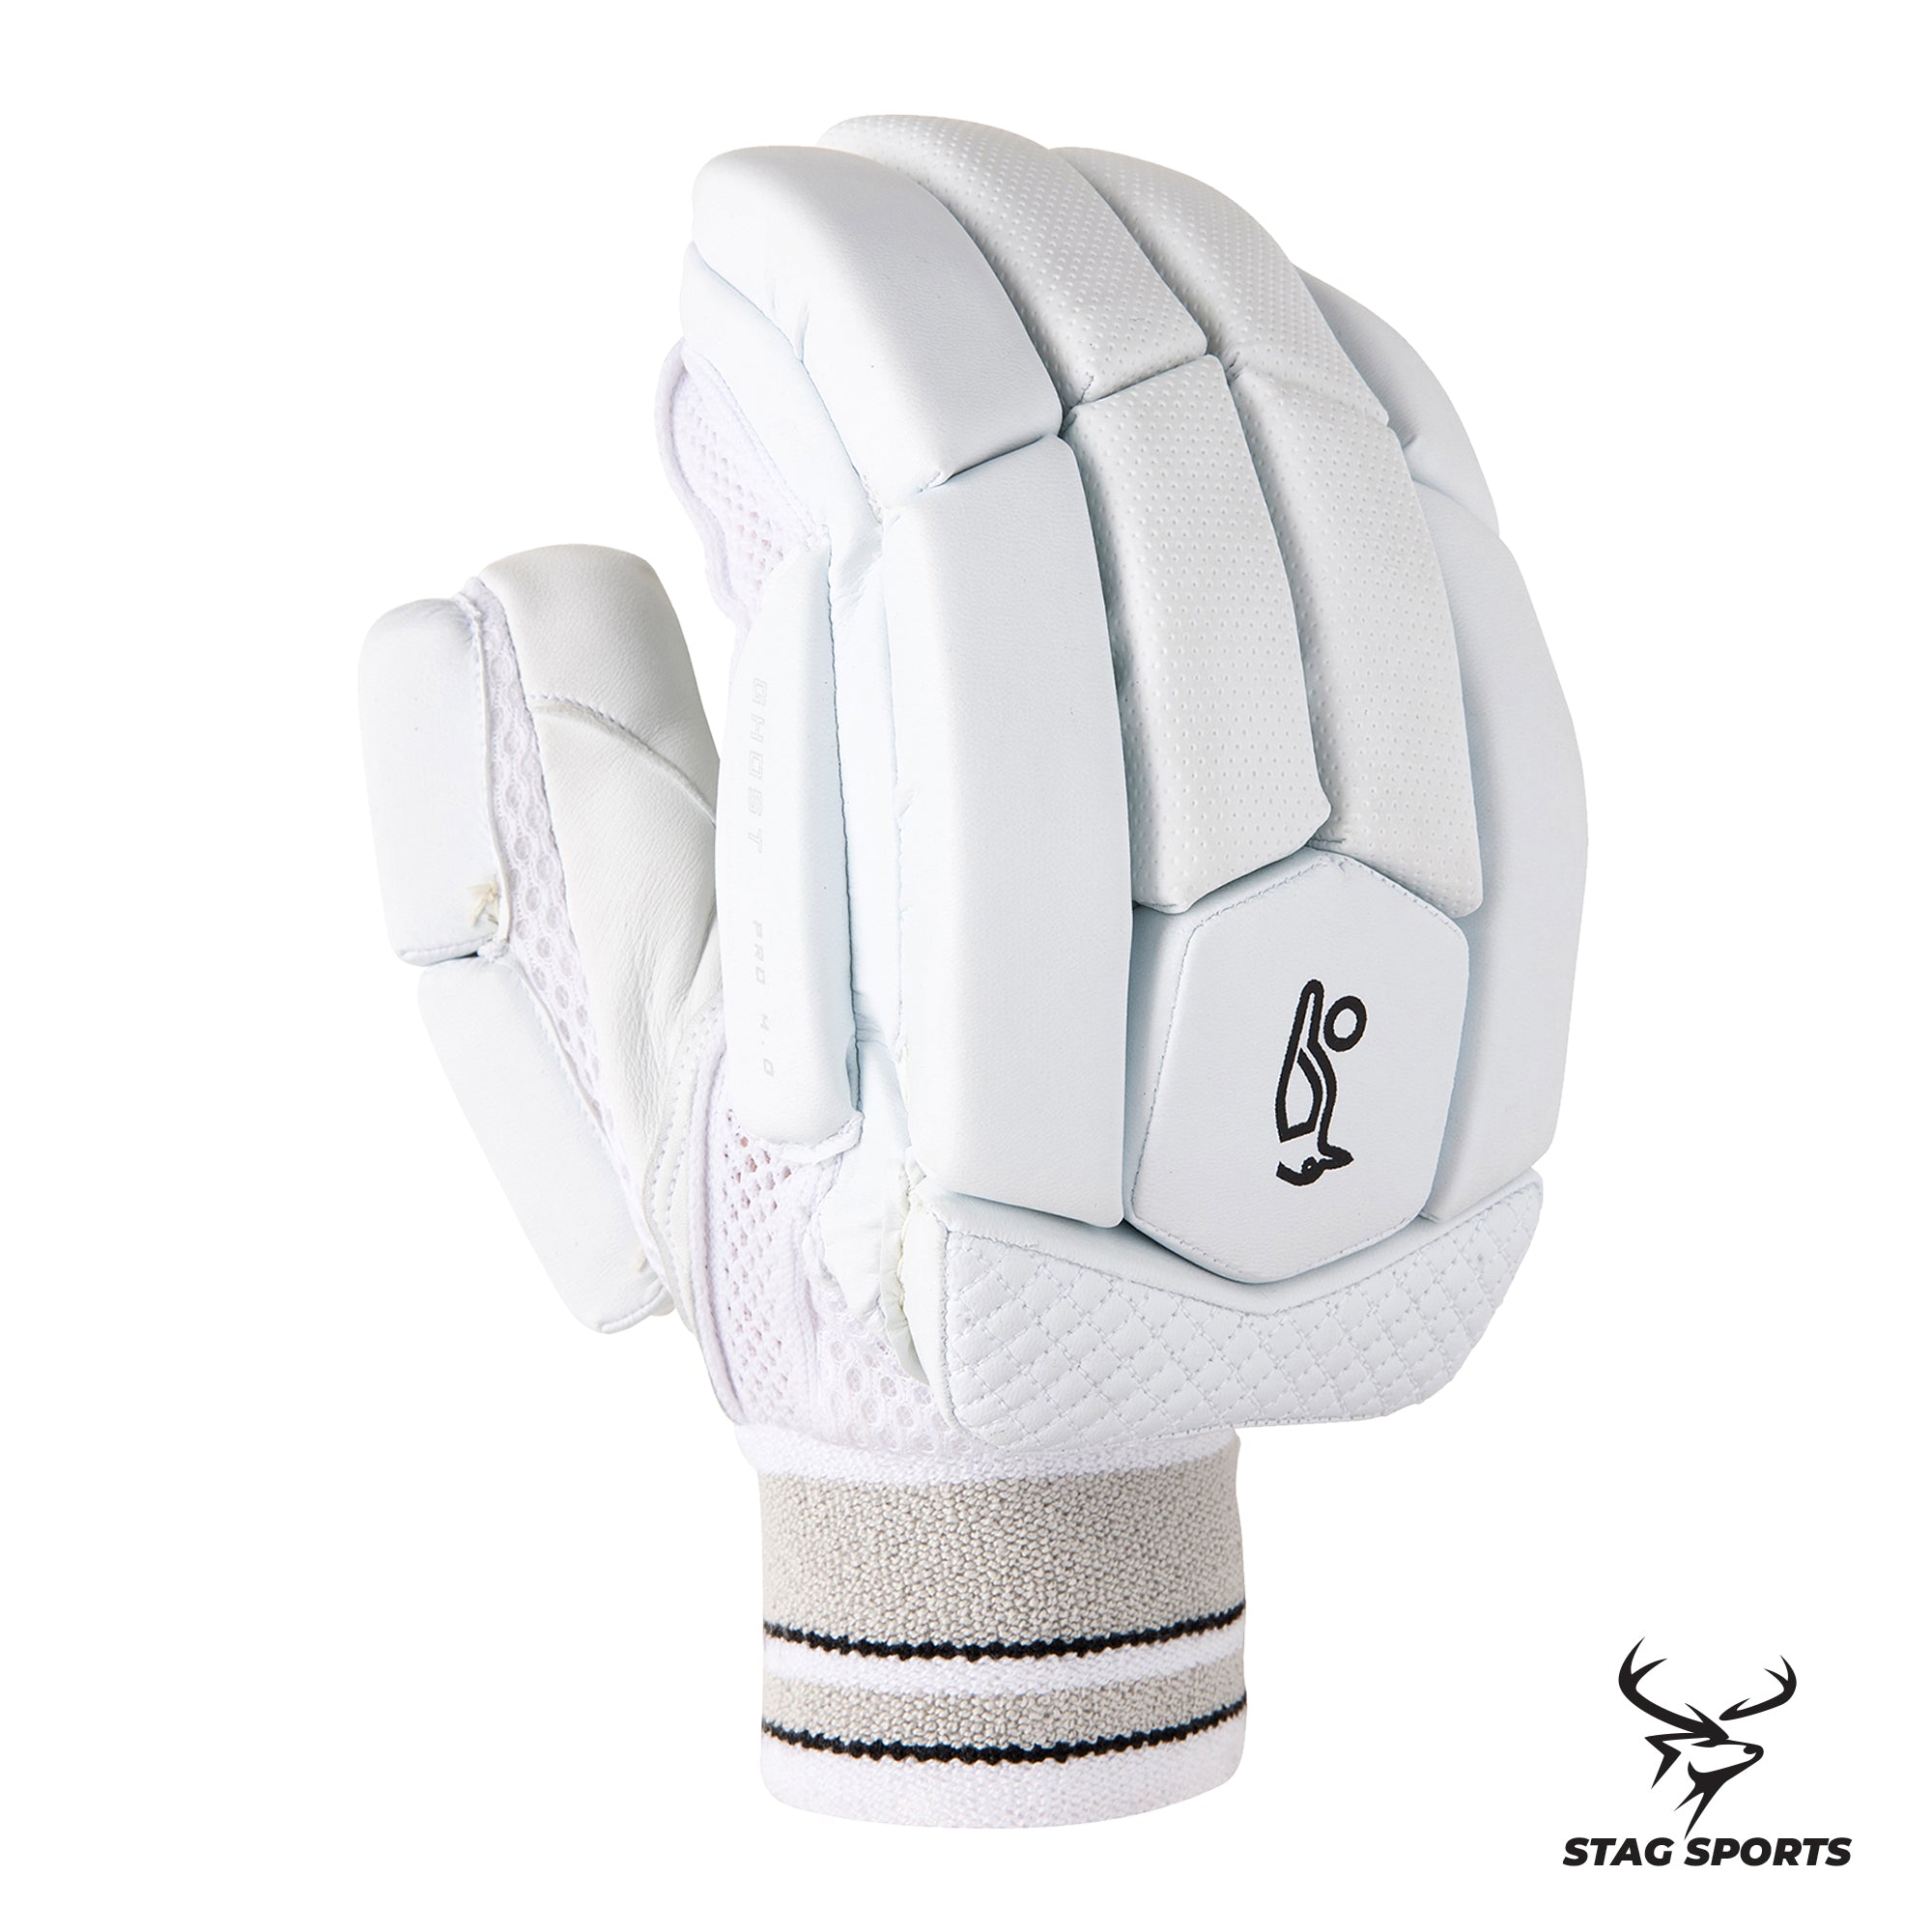 Kookaburra Ghost Pro 4.0 Cricket Batting Gloves